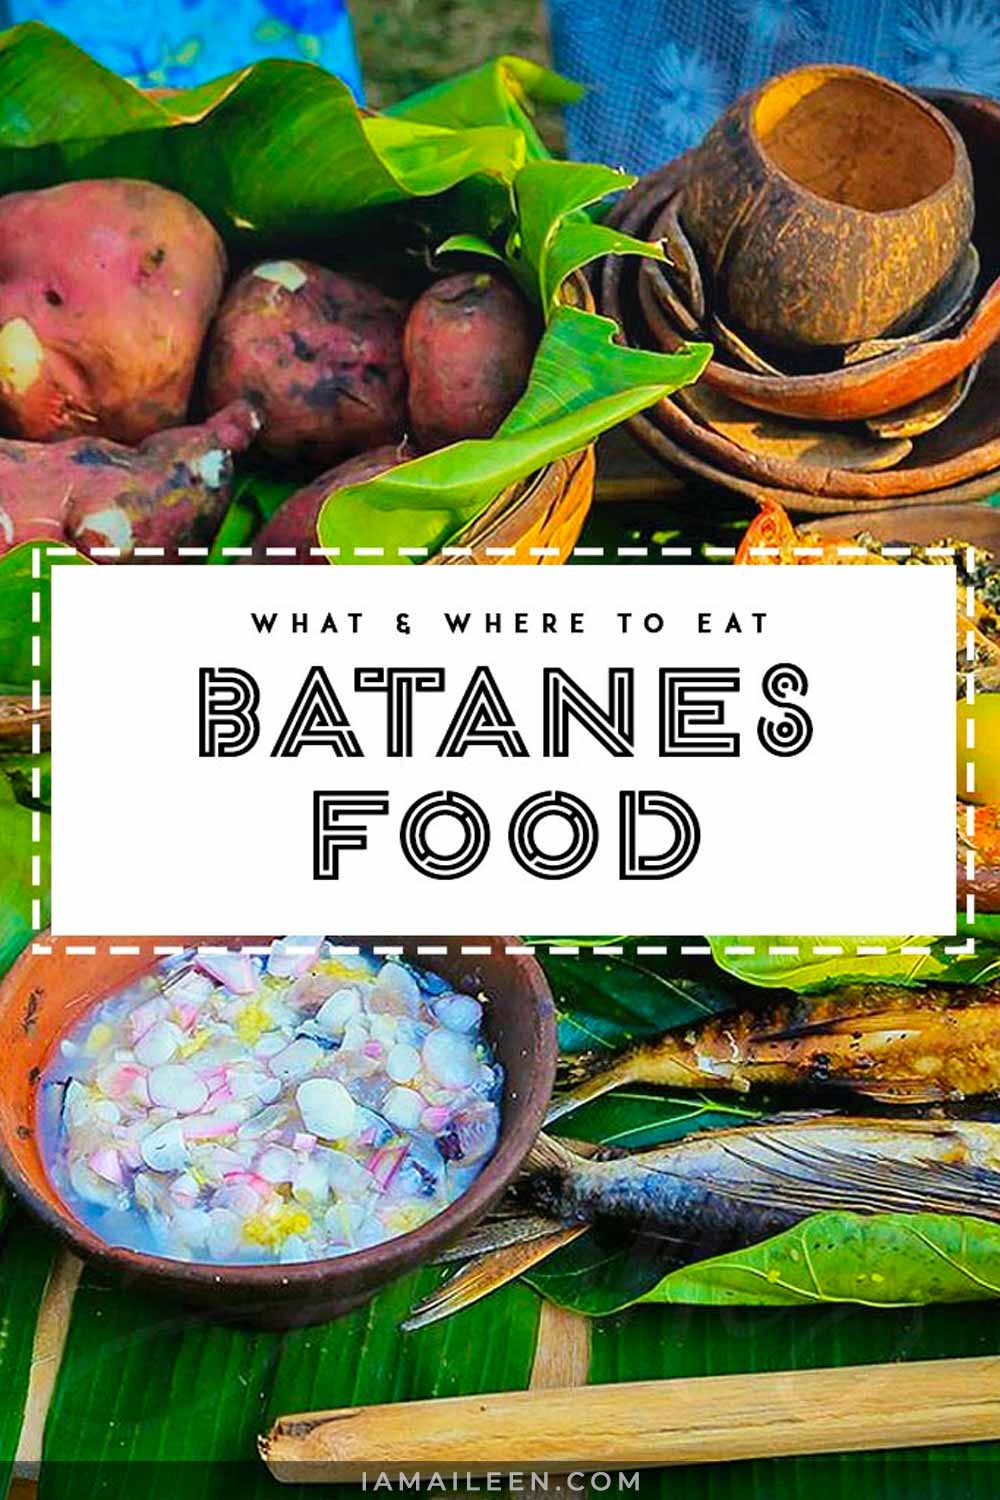 Batanes Food